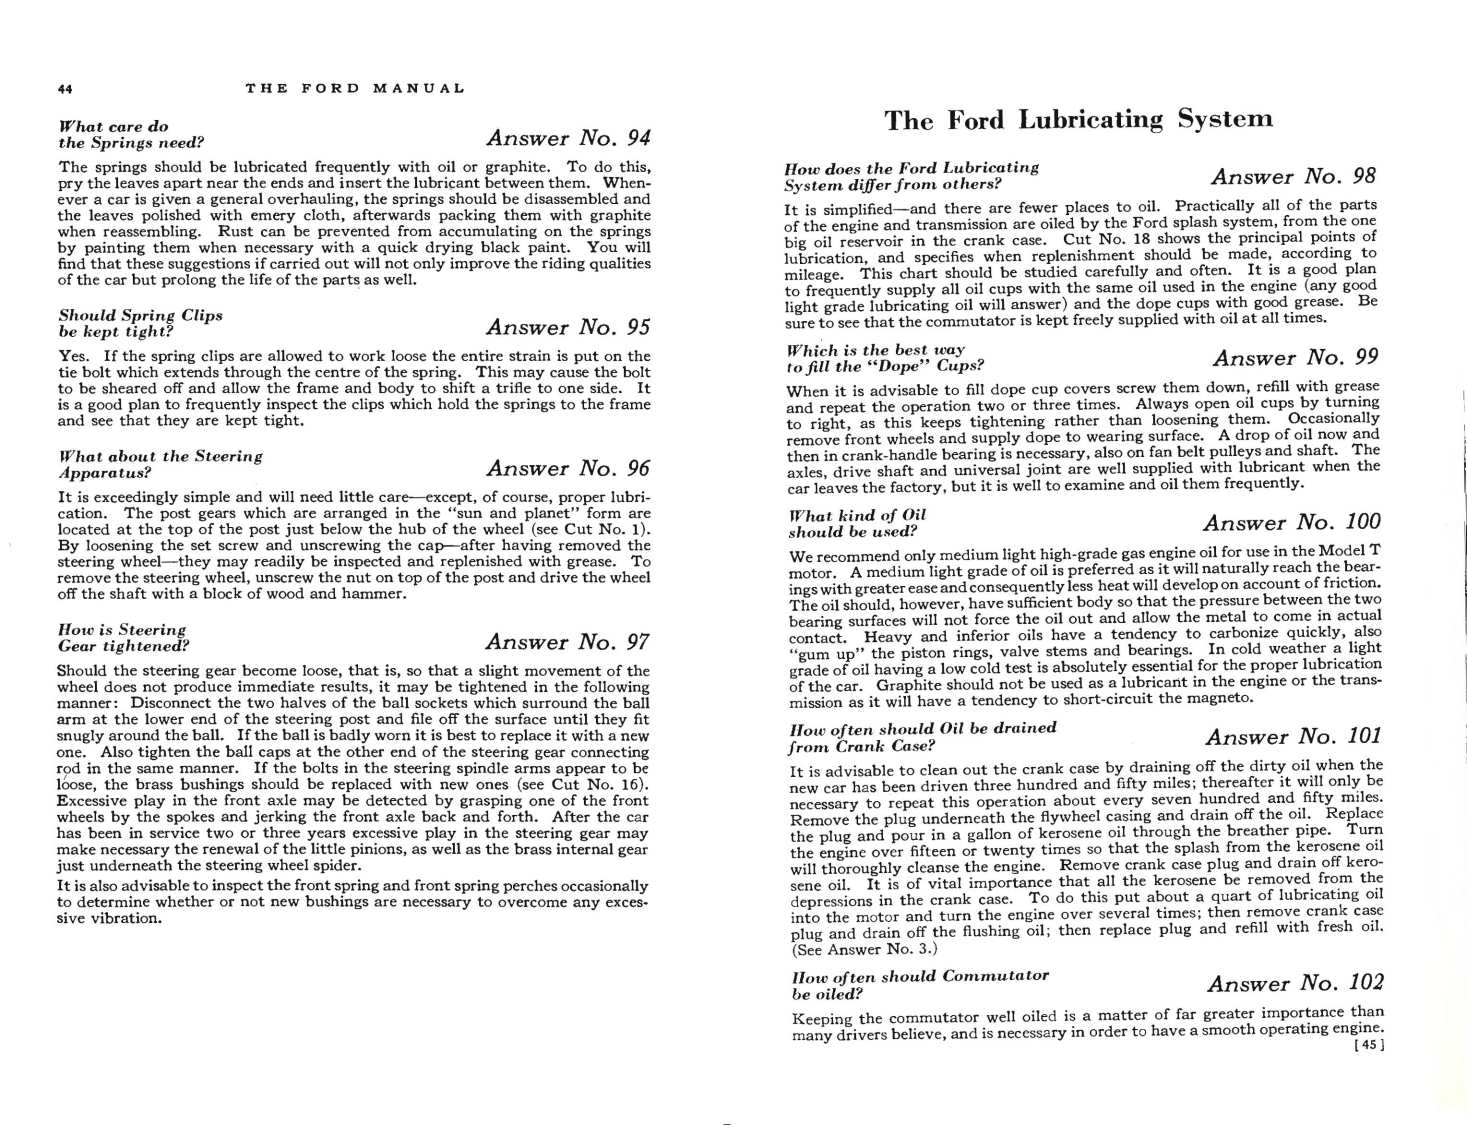 n_1924 Ford Owners Manual-44-45.jpg